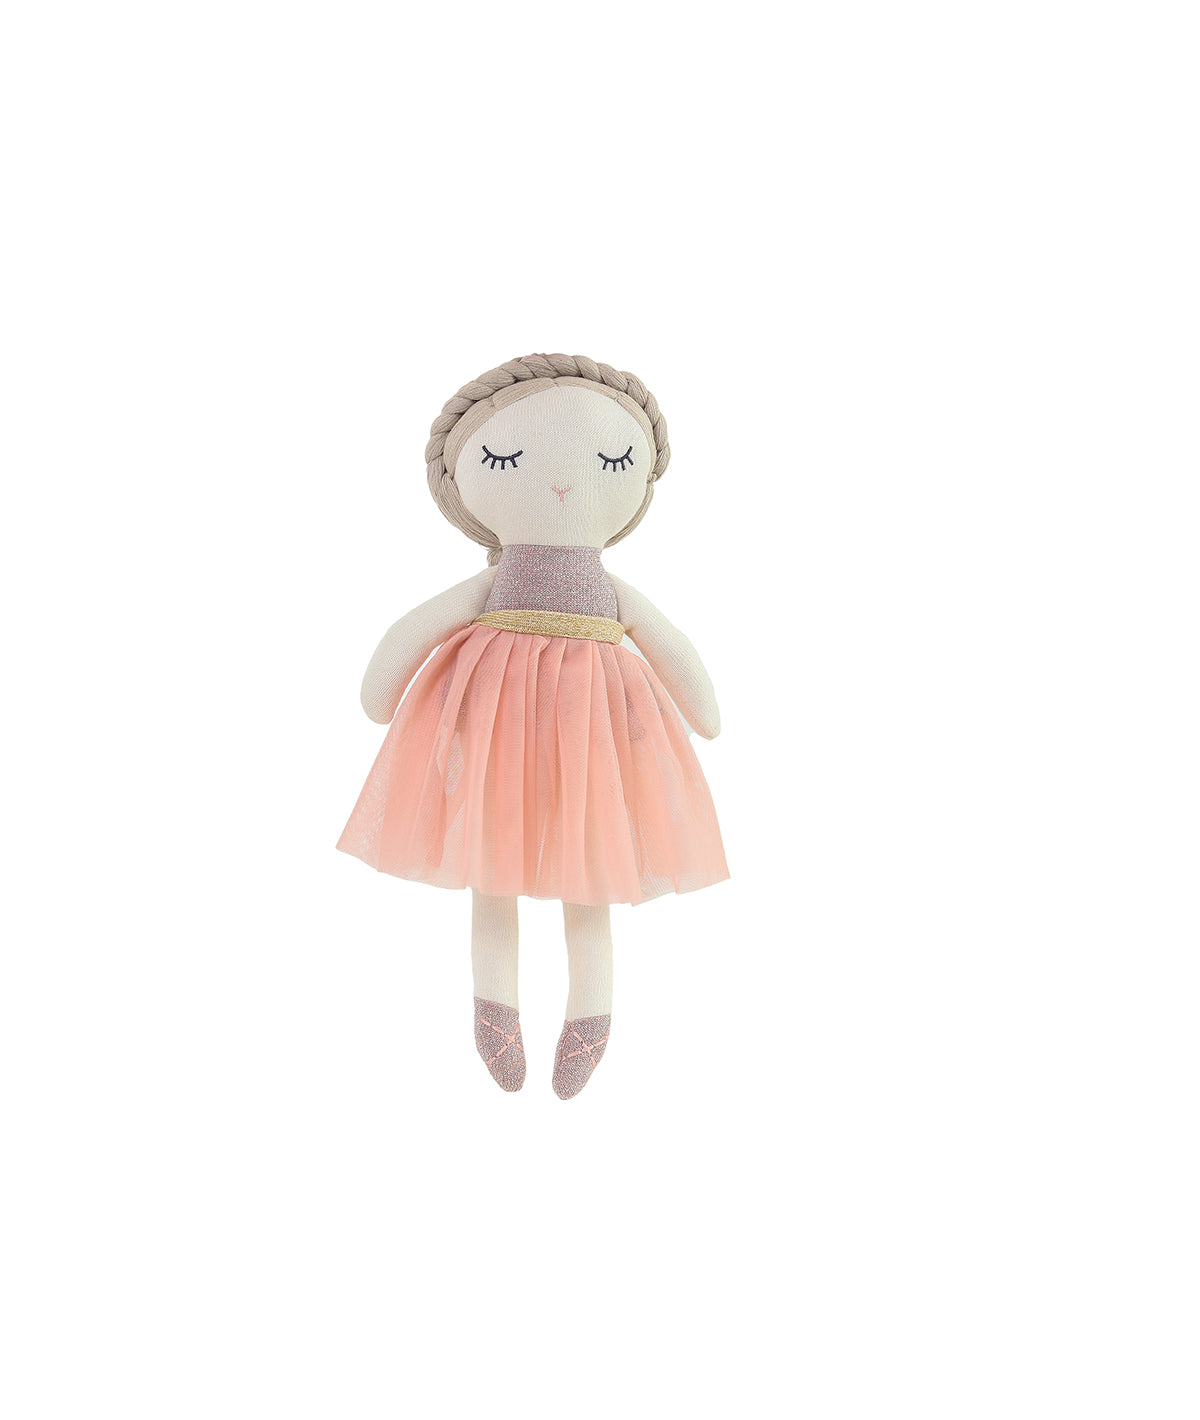 Ballerina Cotton Knitted Stuffed Soft Toy (Ivory, Pink & Lurex)